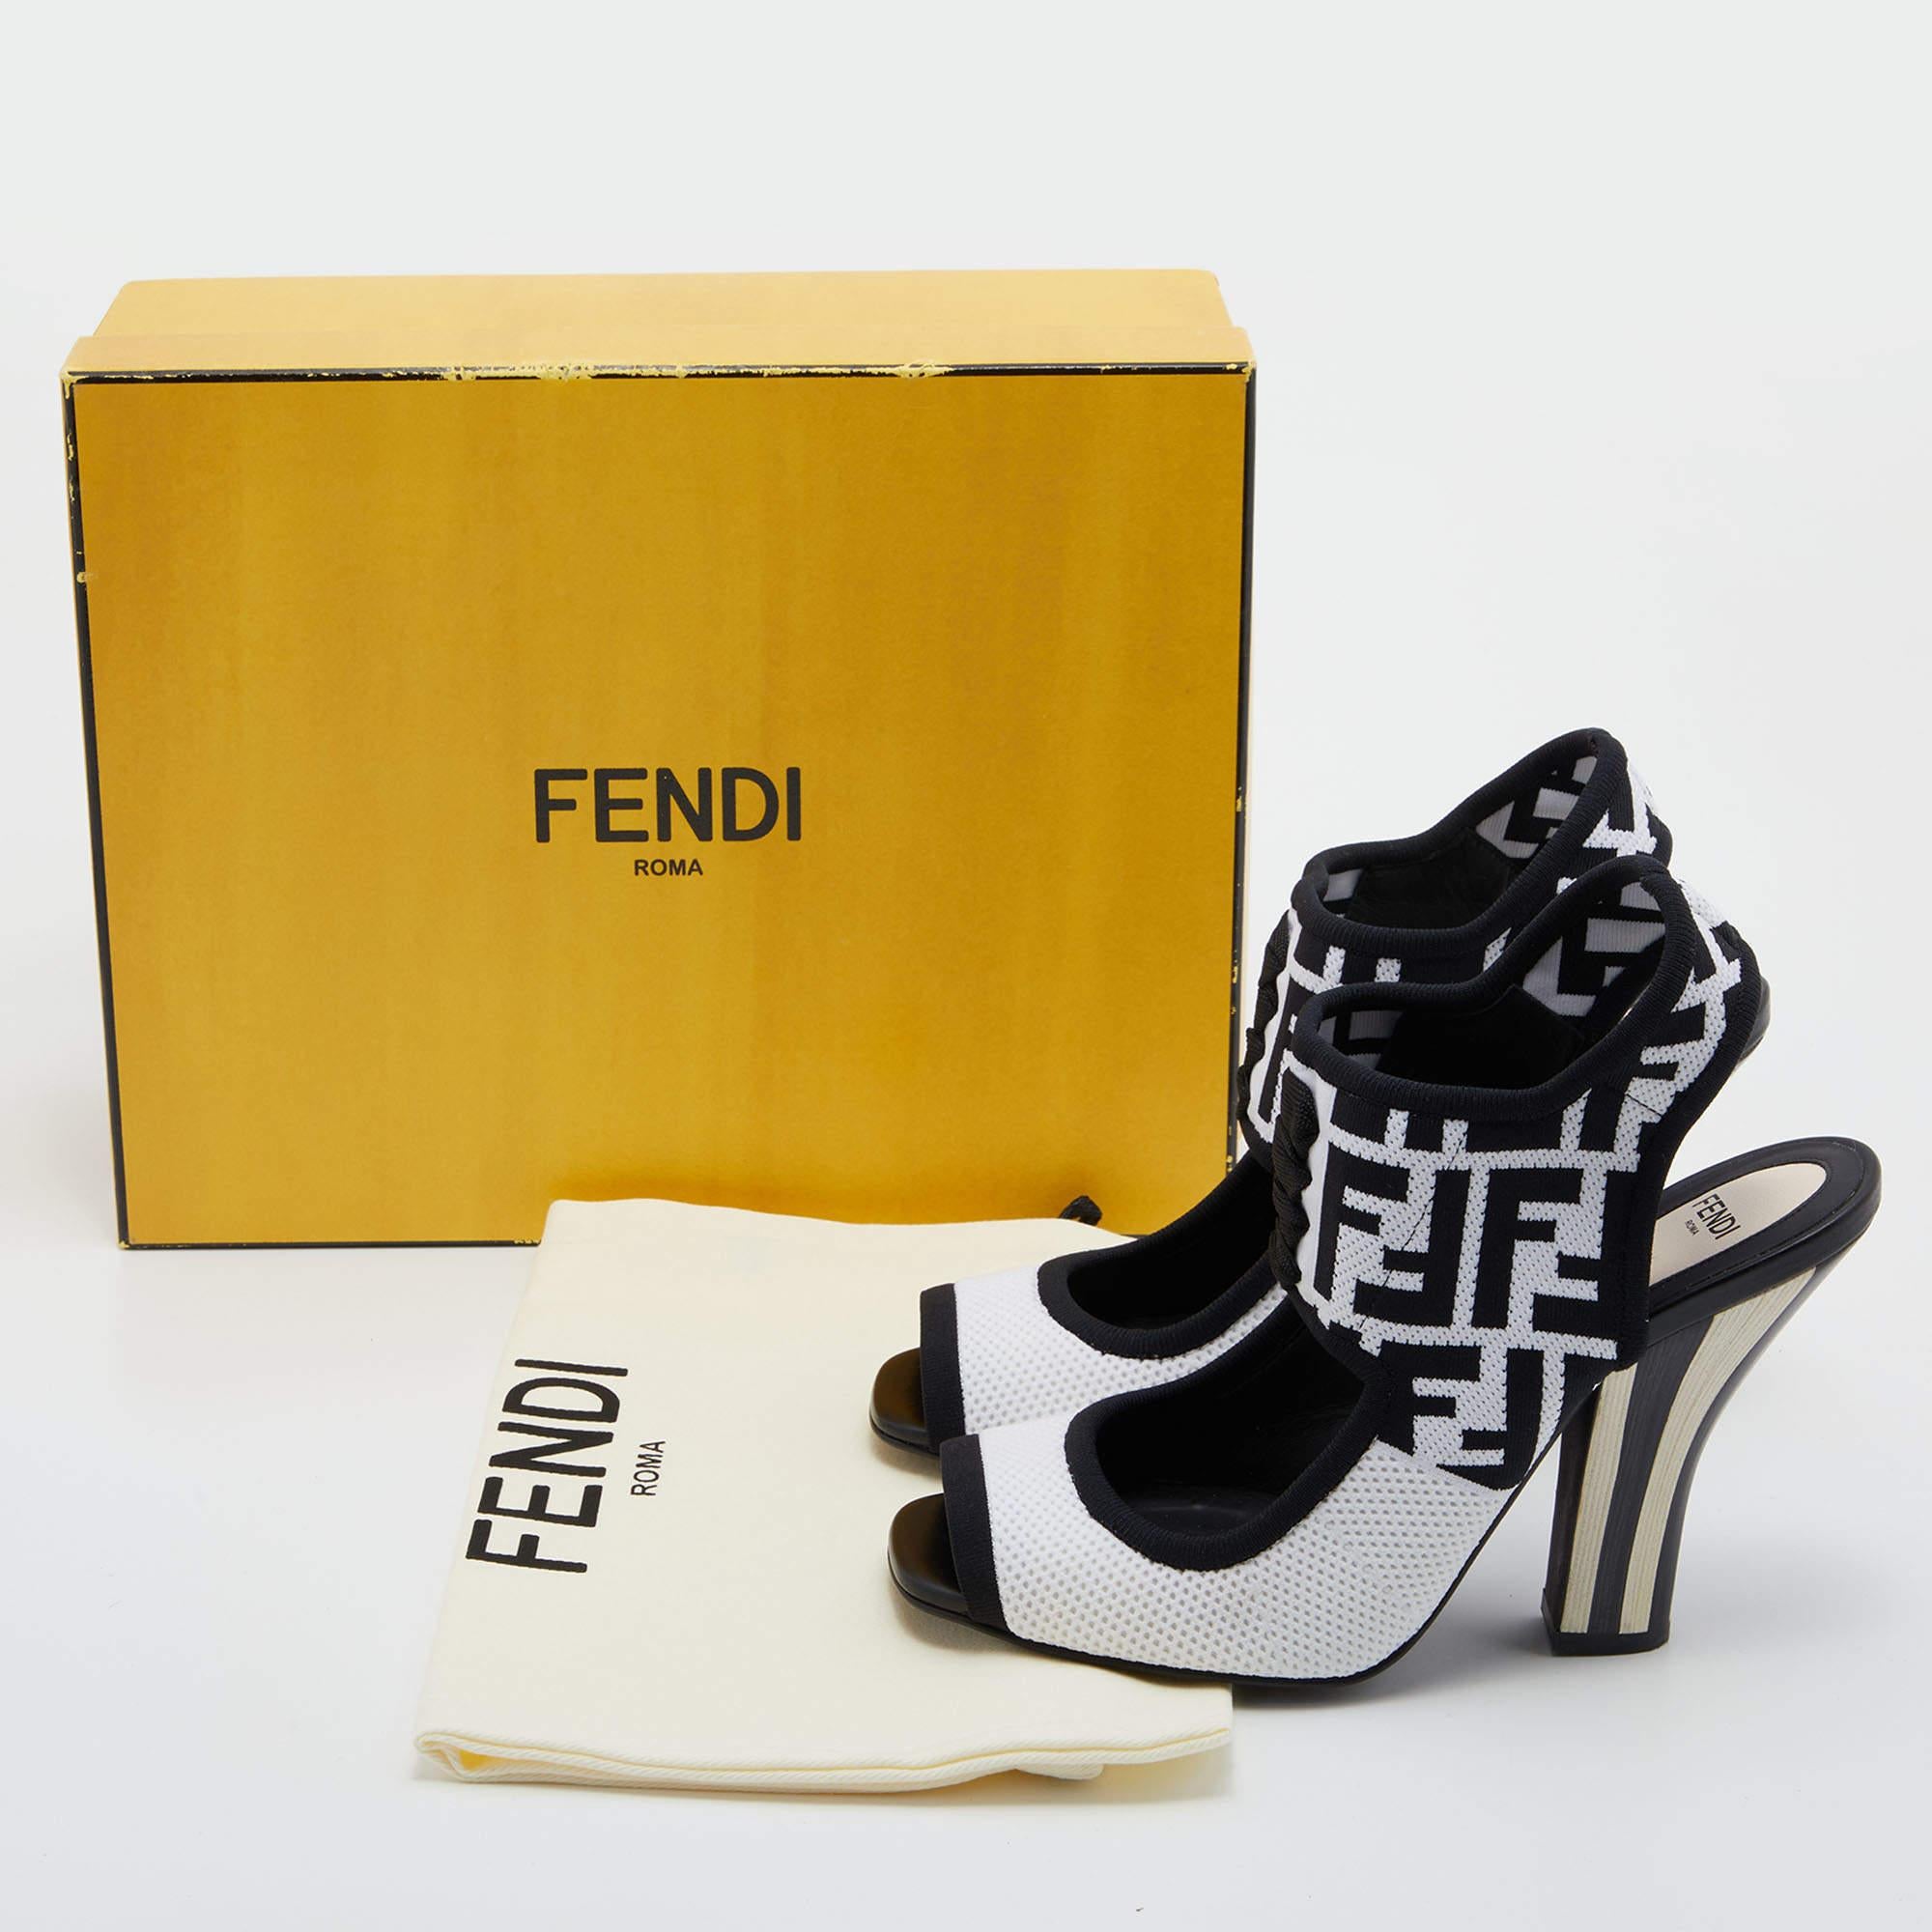 Fendi White/Black Zucca Knit Fabric Peep Toe Slingback Sandals Size 40 3